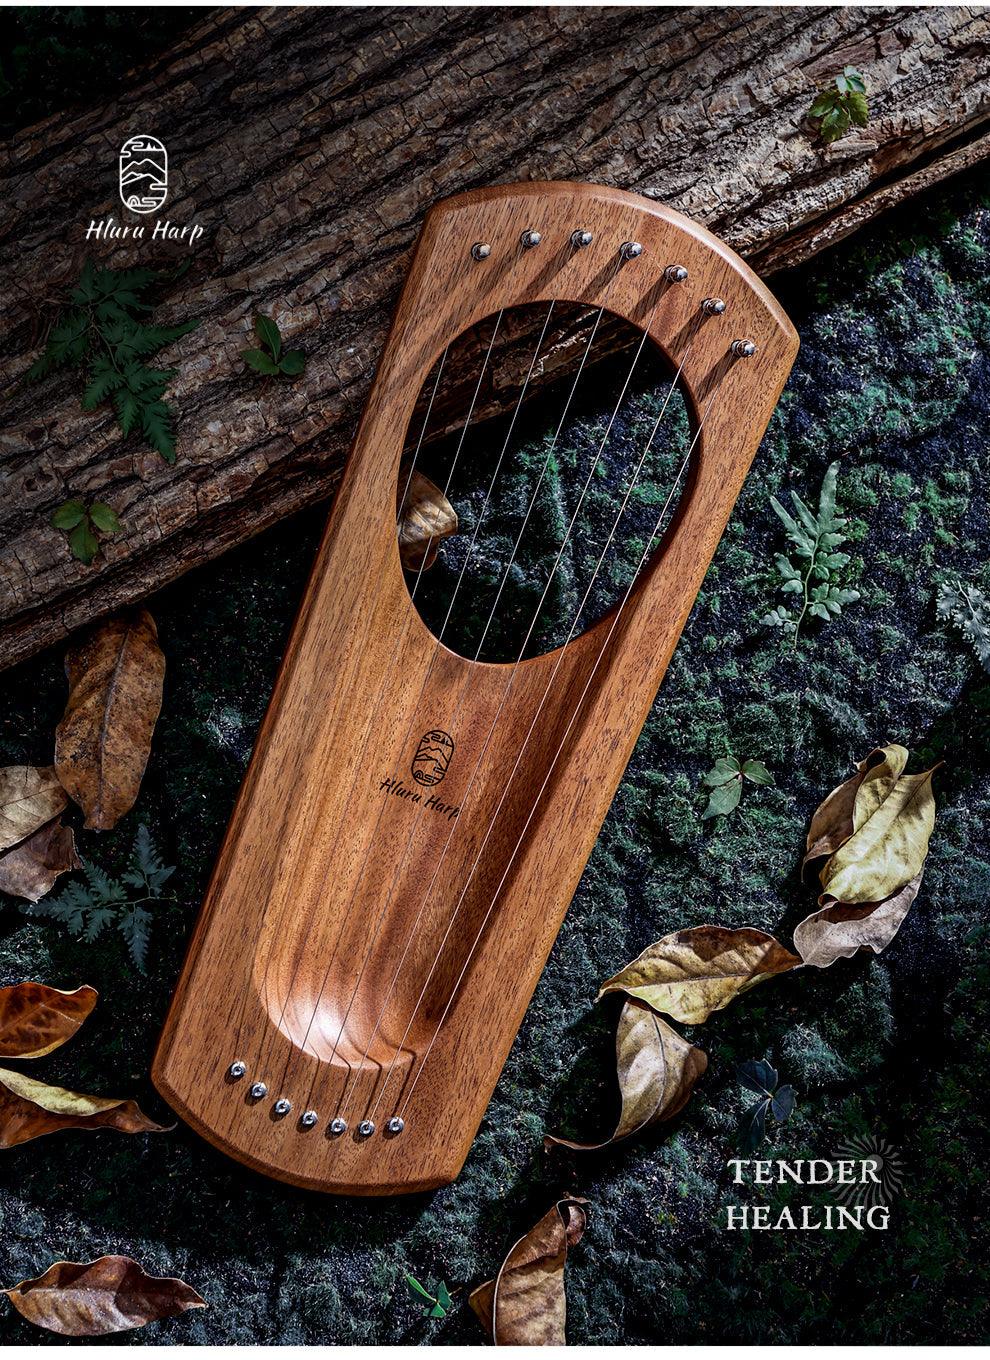 Hluru Mini Lyre Harp 7-string "Light on earth" Instrument Gift for Beginners - HLURU.SHOP